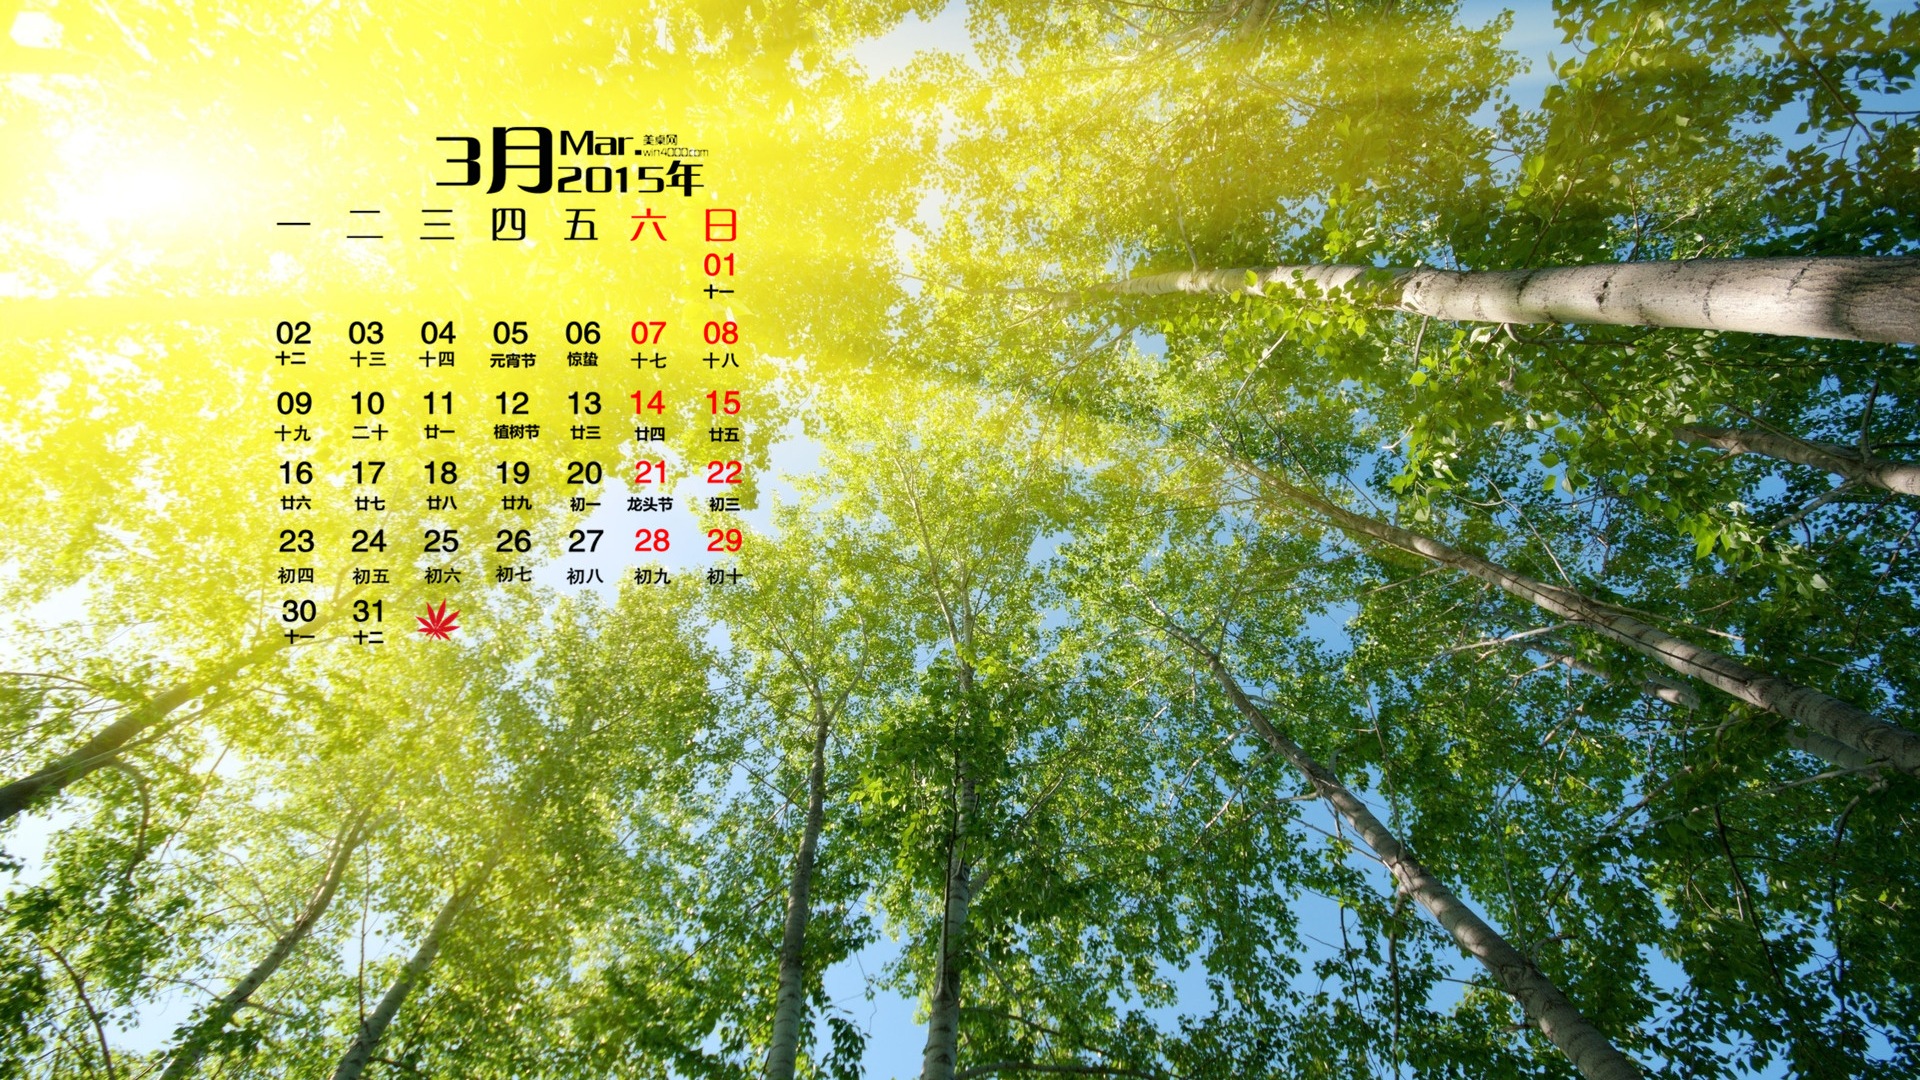 März 2015 Kalender Tapete (1) #20 - 1920x1080